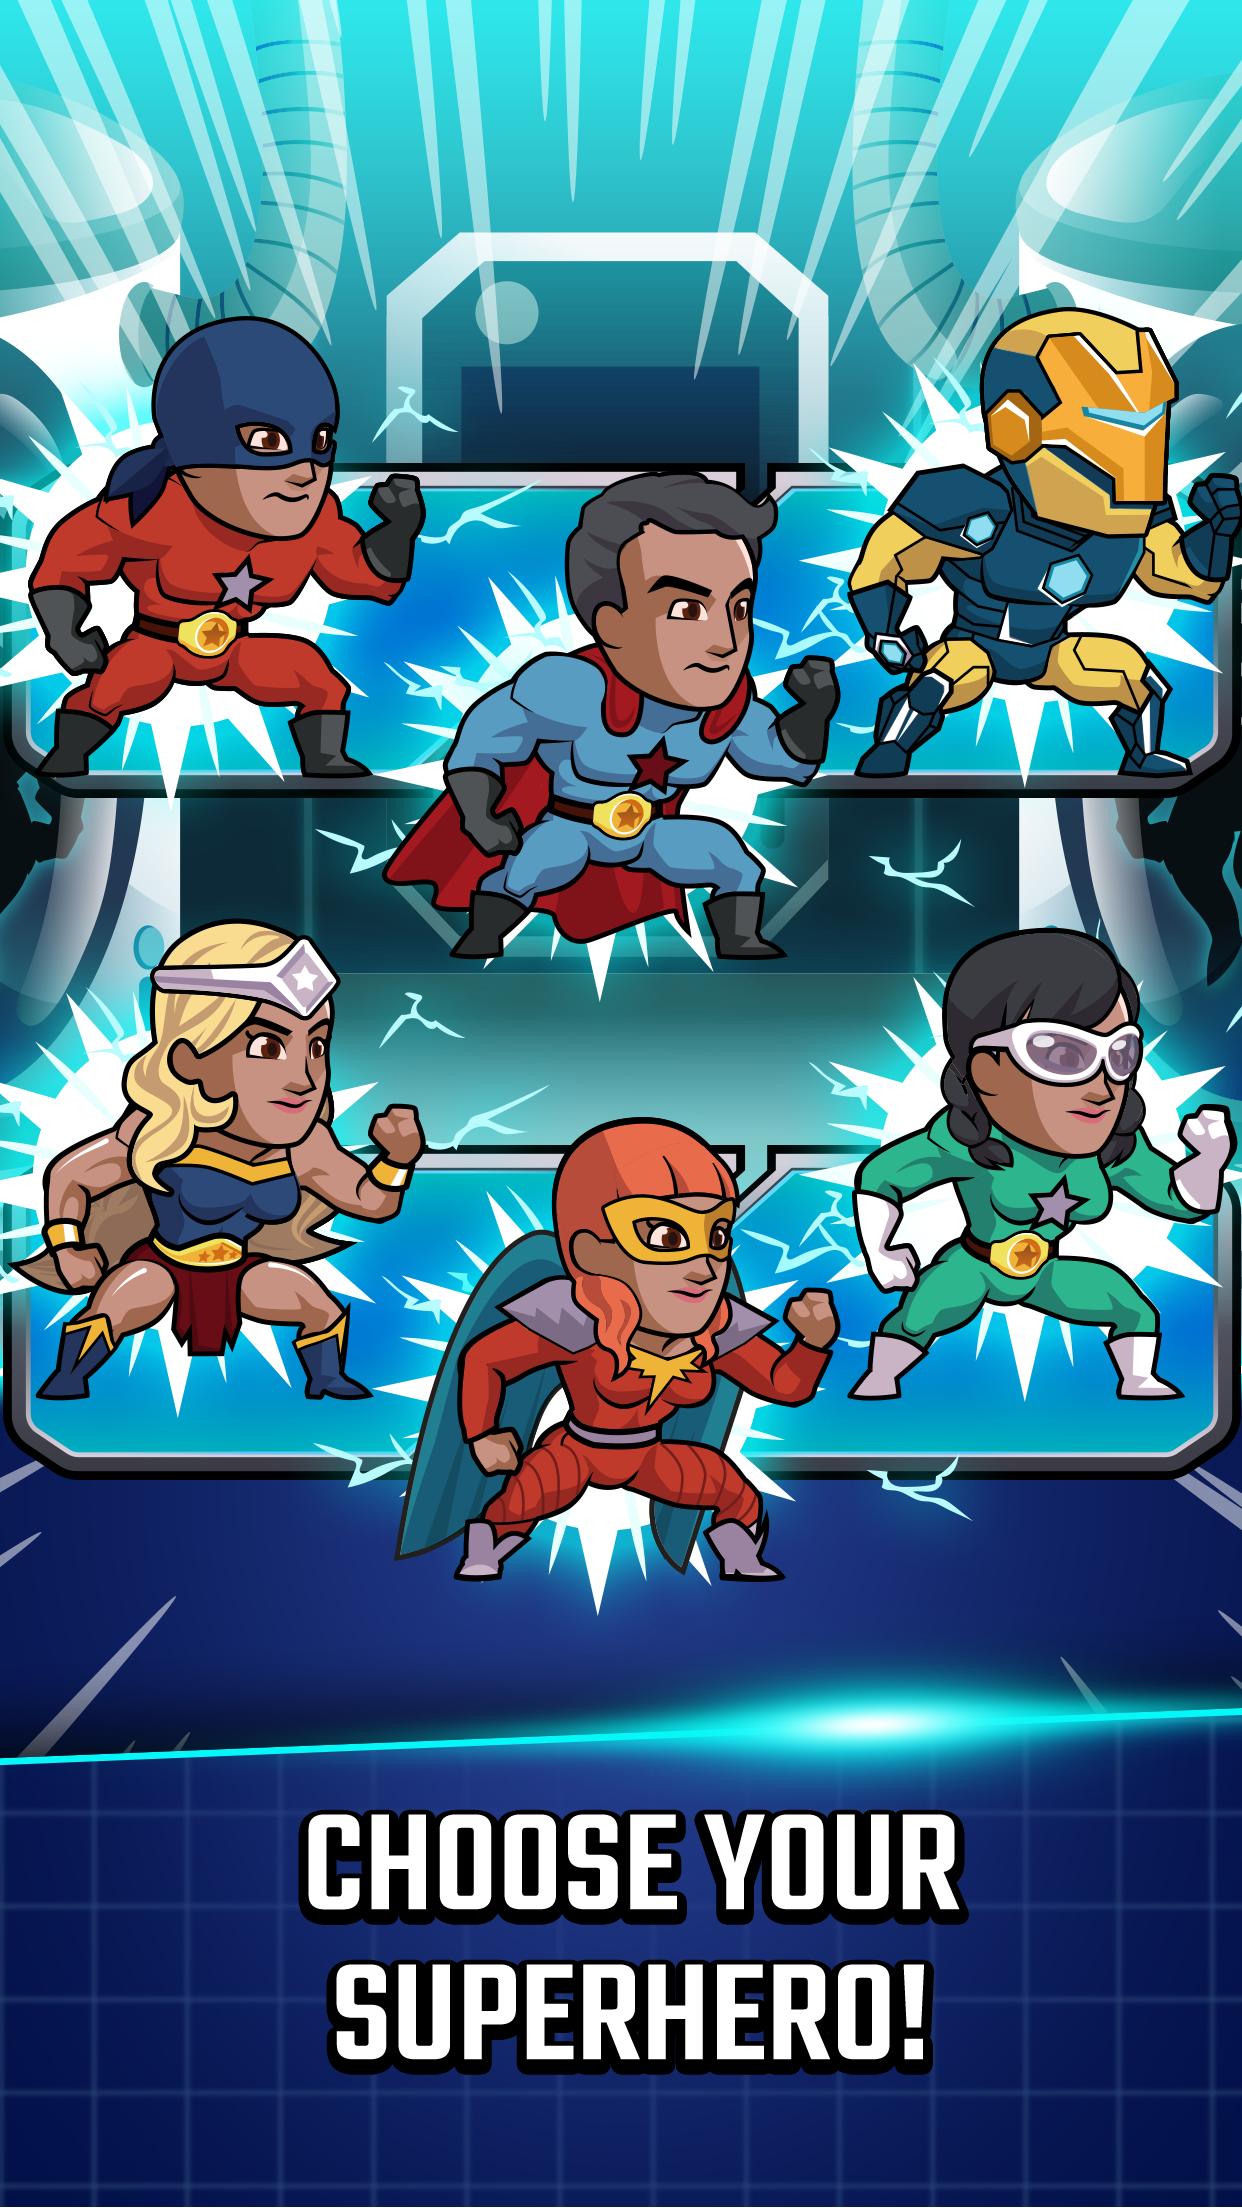 Super League of Heroes - Comic Book Champions 1.0.7 Screenshot 3